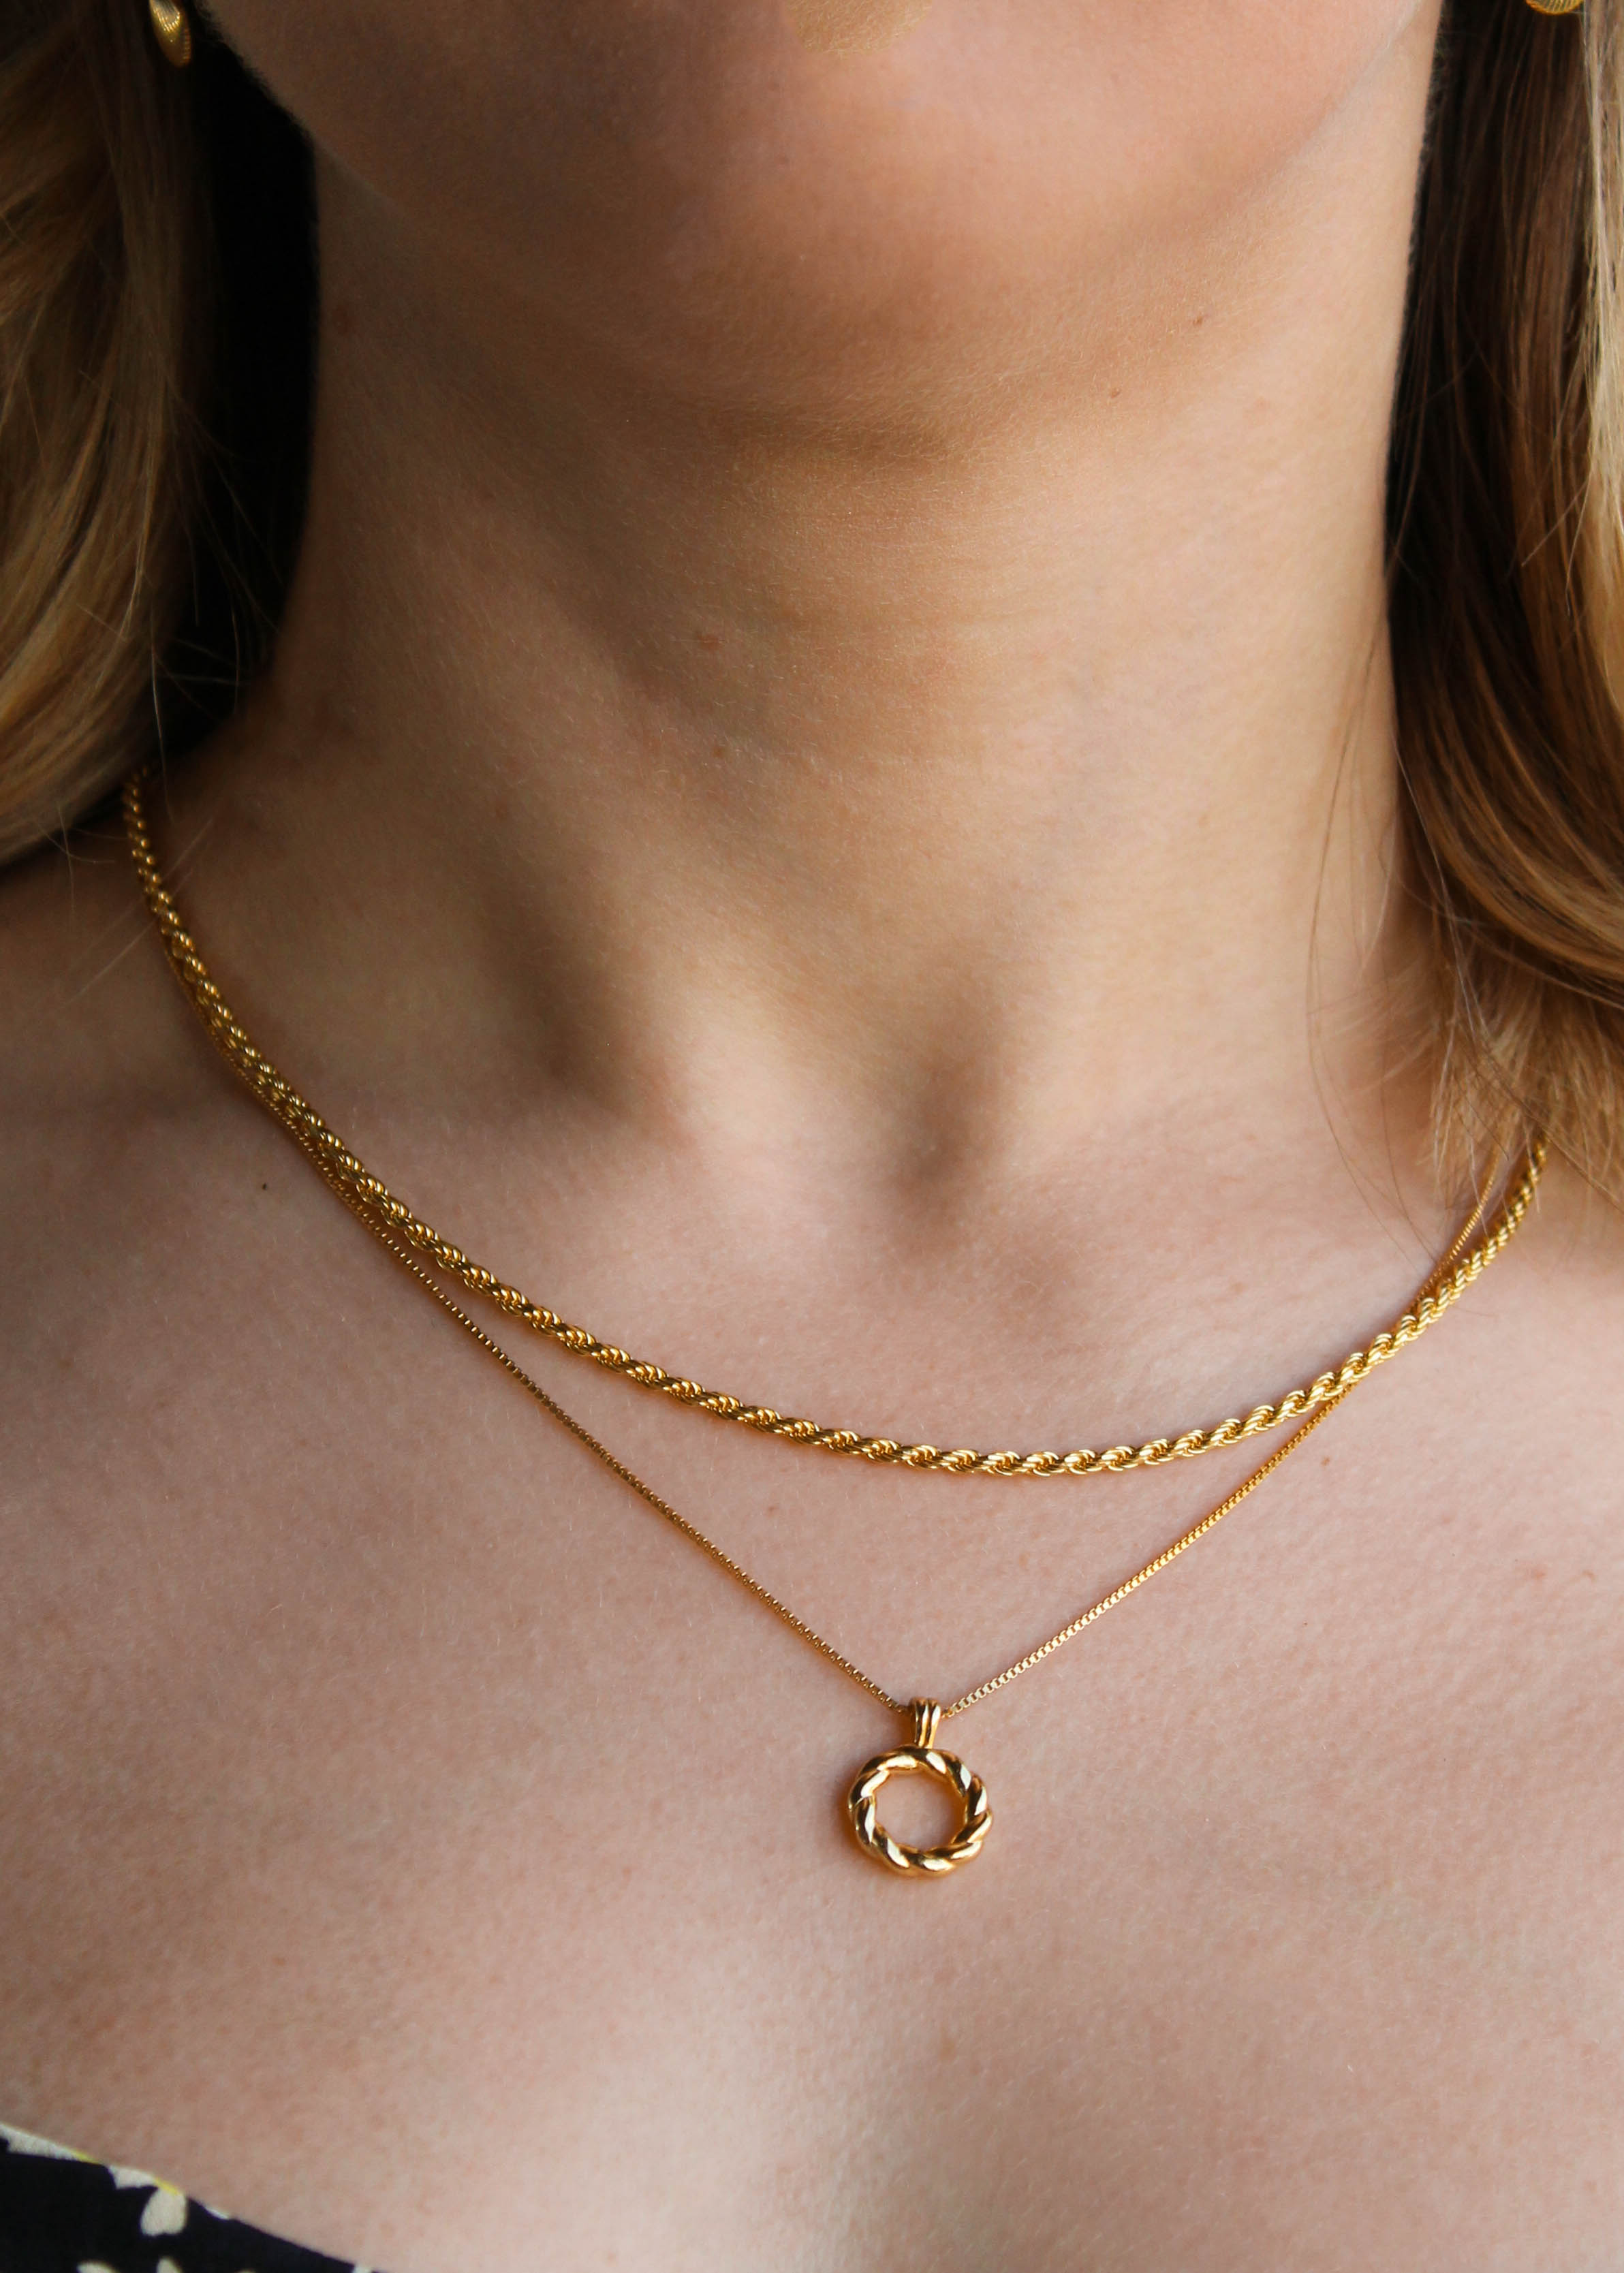 Astrid & Miyu -Rope Ring Pendant Necklace- Gold